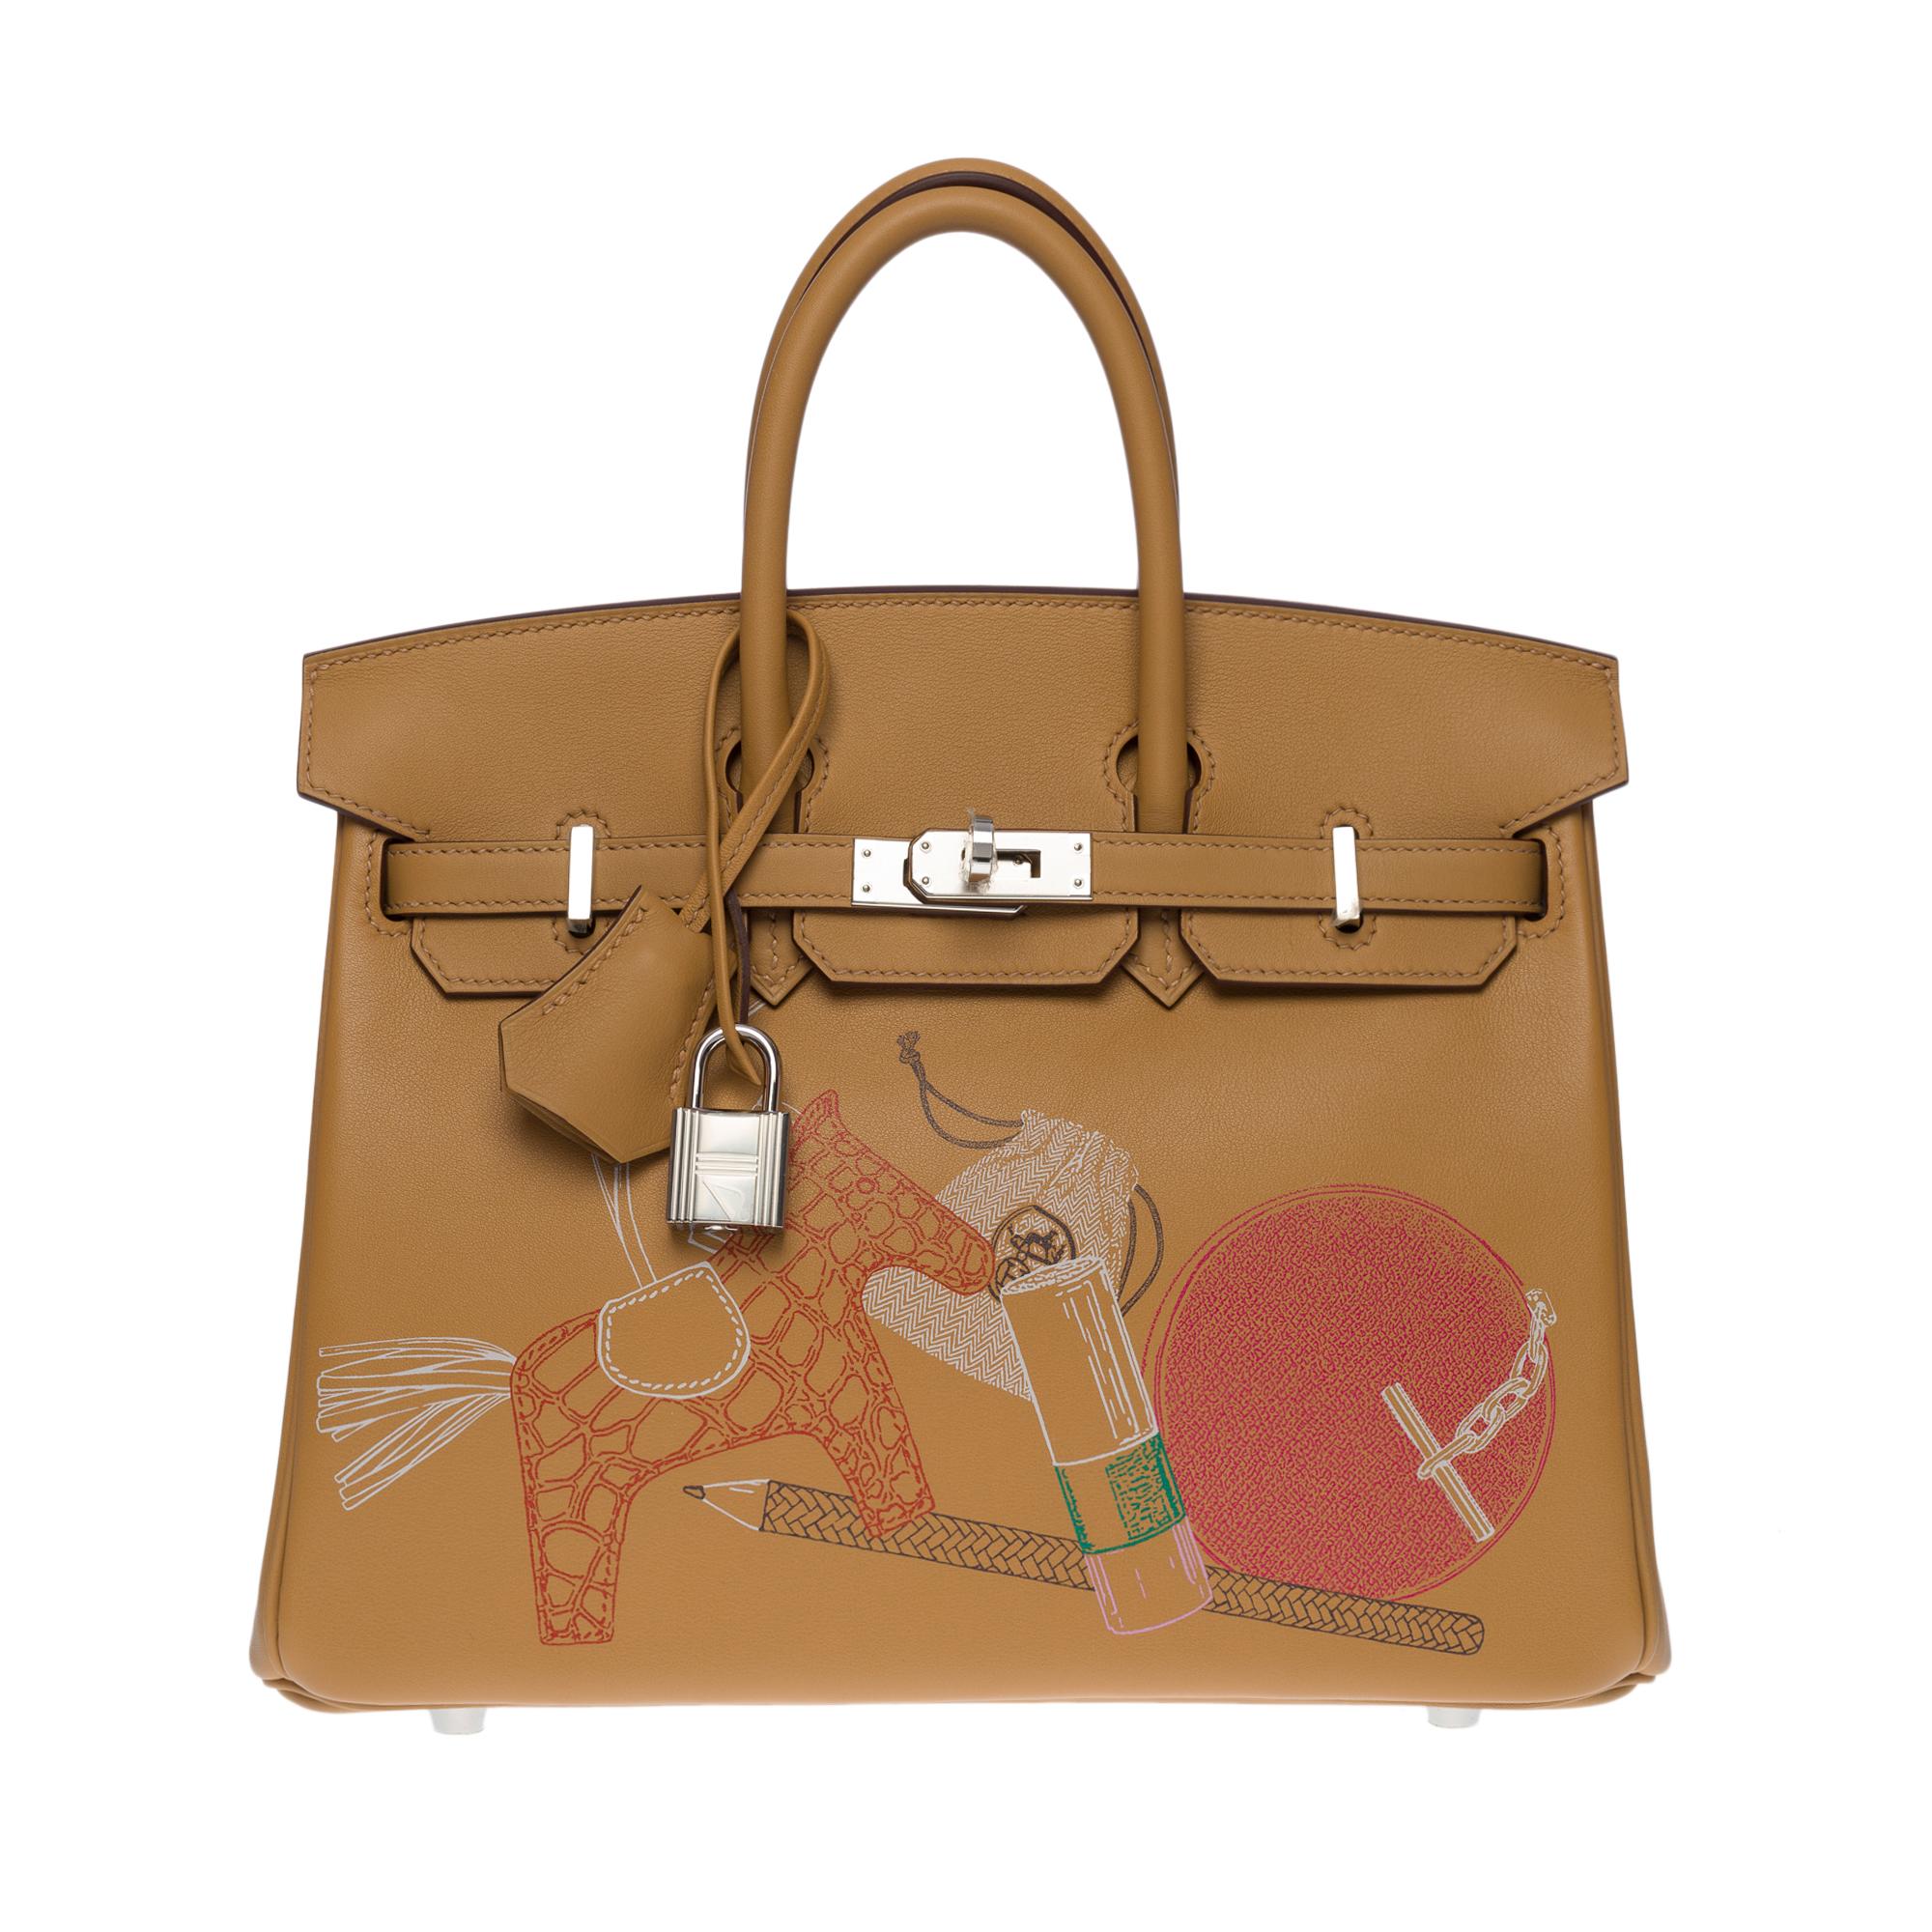 Fantastic Hermes Birkin 25cm handbag Biscuit In and Out Limited Edition ...